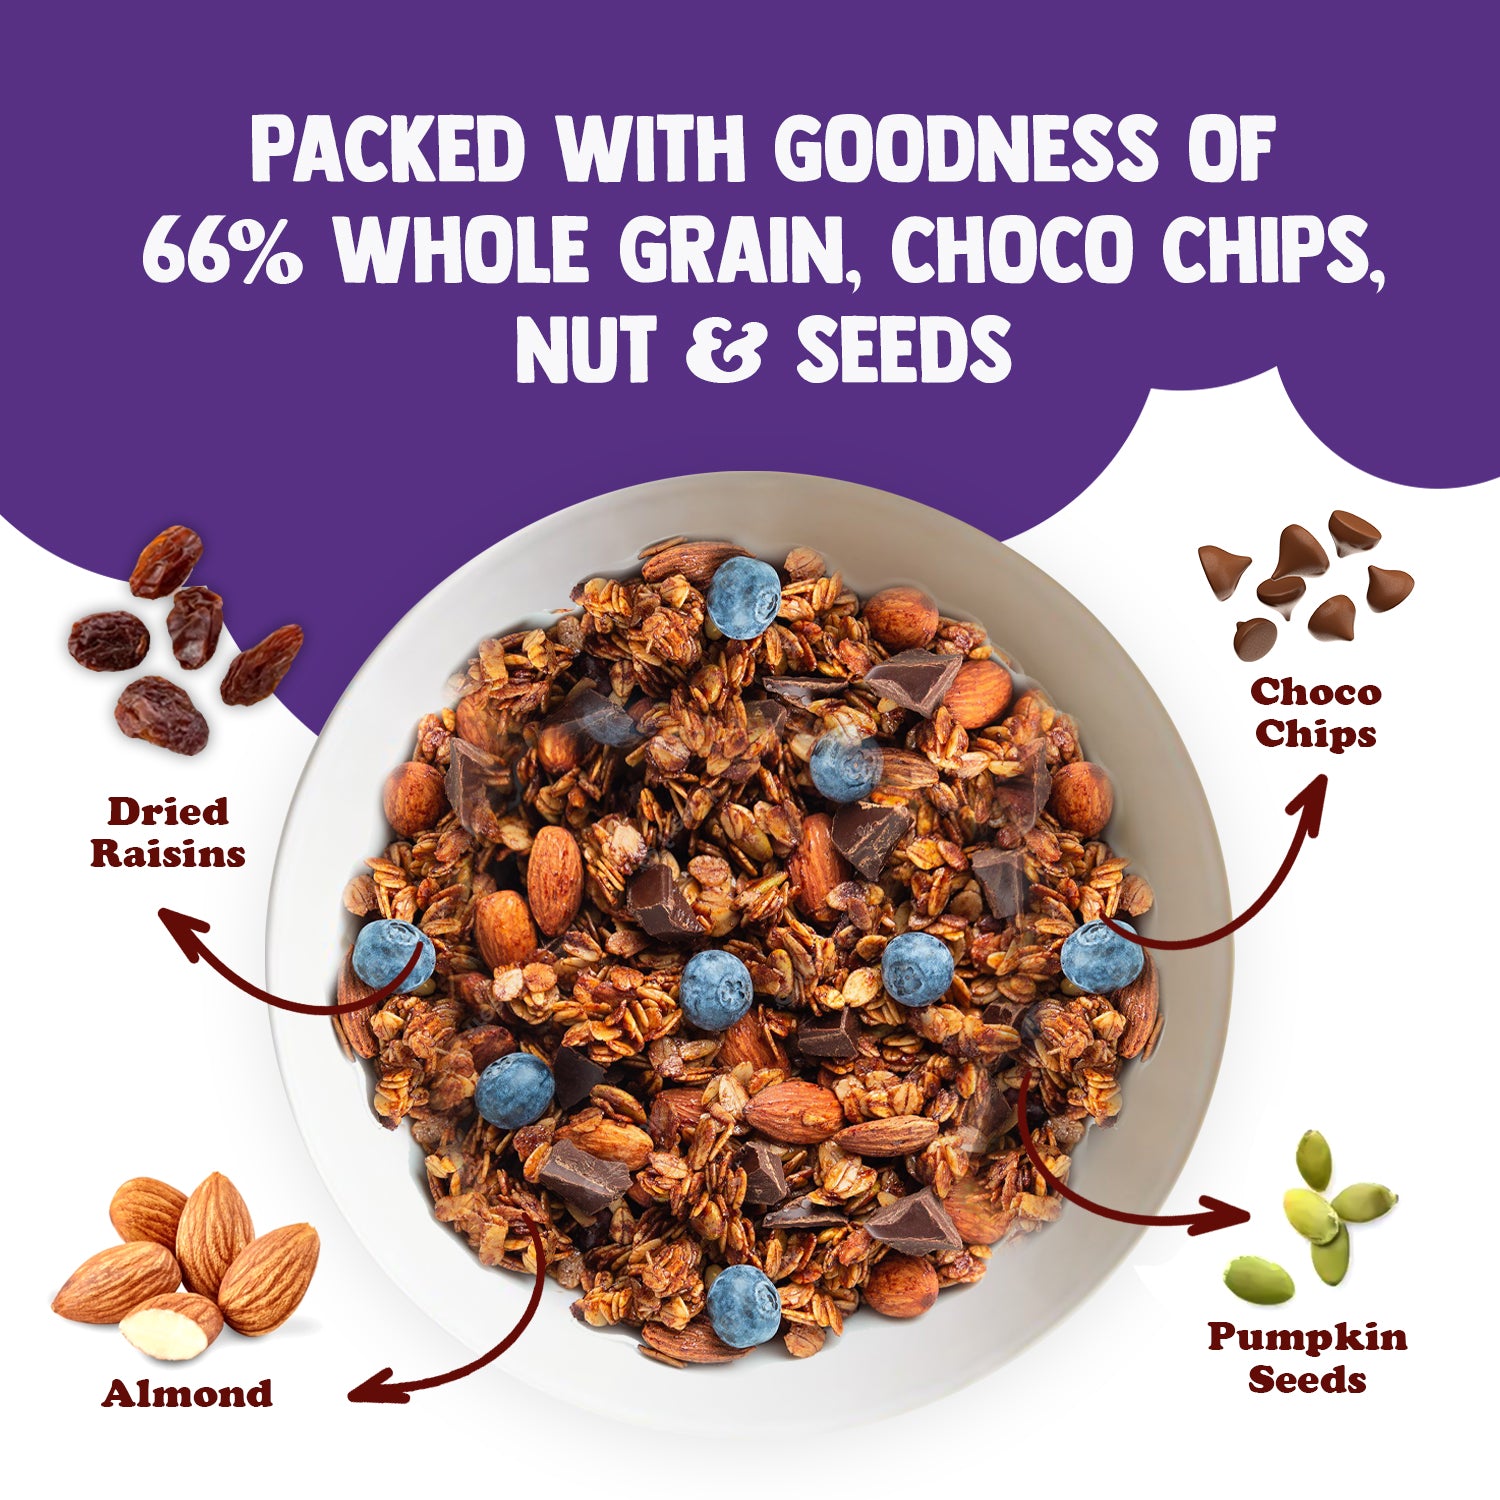 Choco Almond & No Added Sugar Muesli Combo | Healthy Protein Food & Breakfast Cereal, (2x1000g)